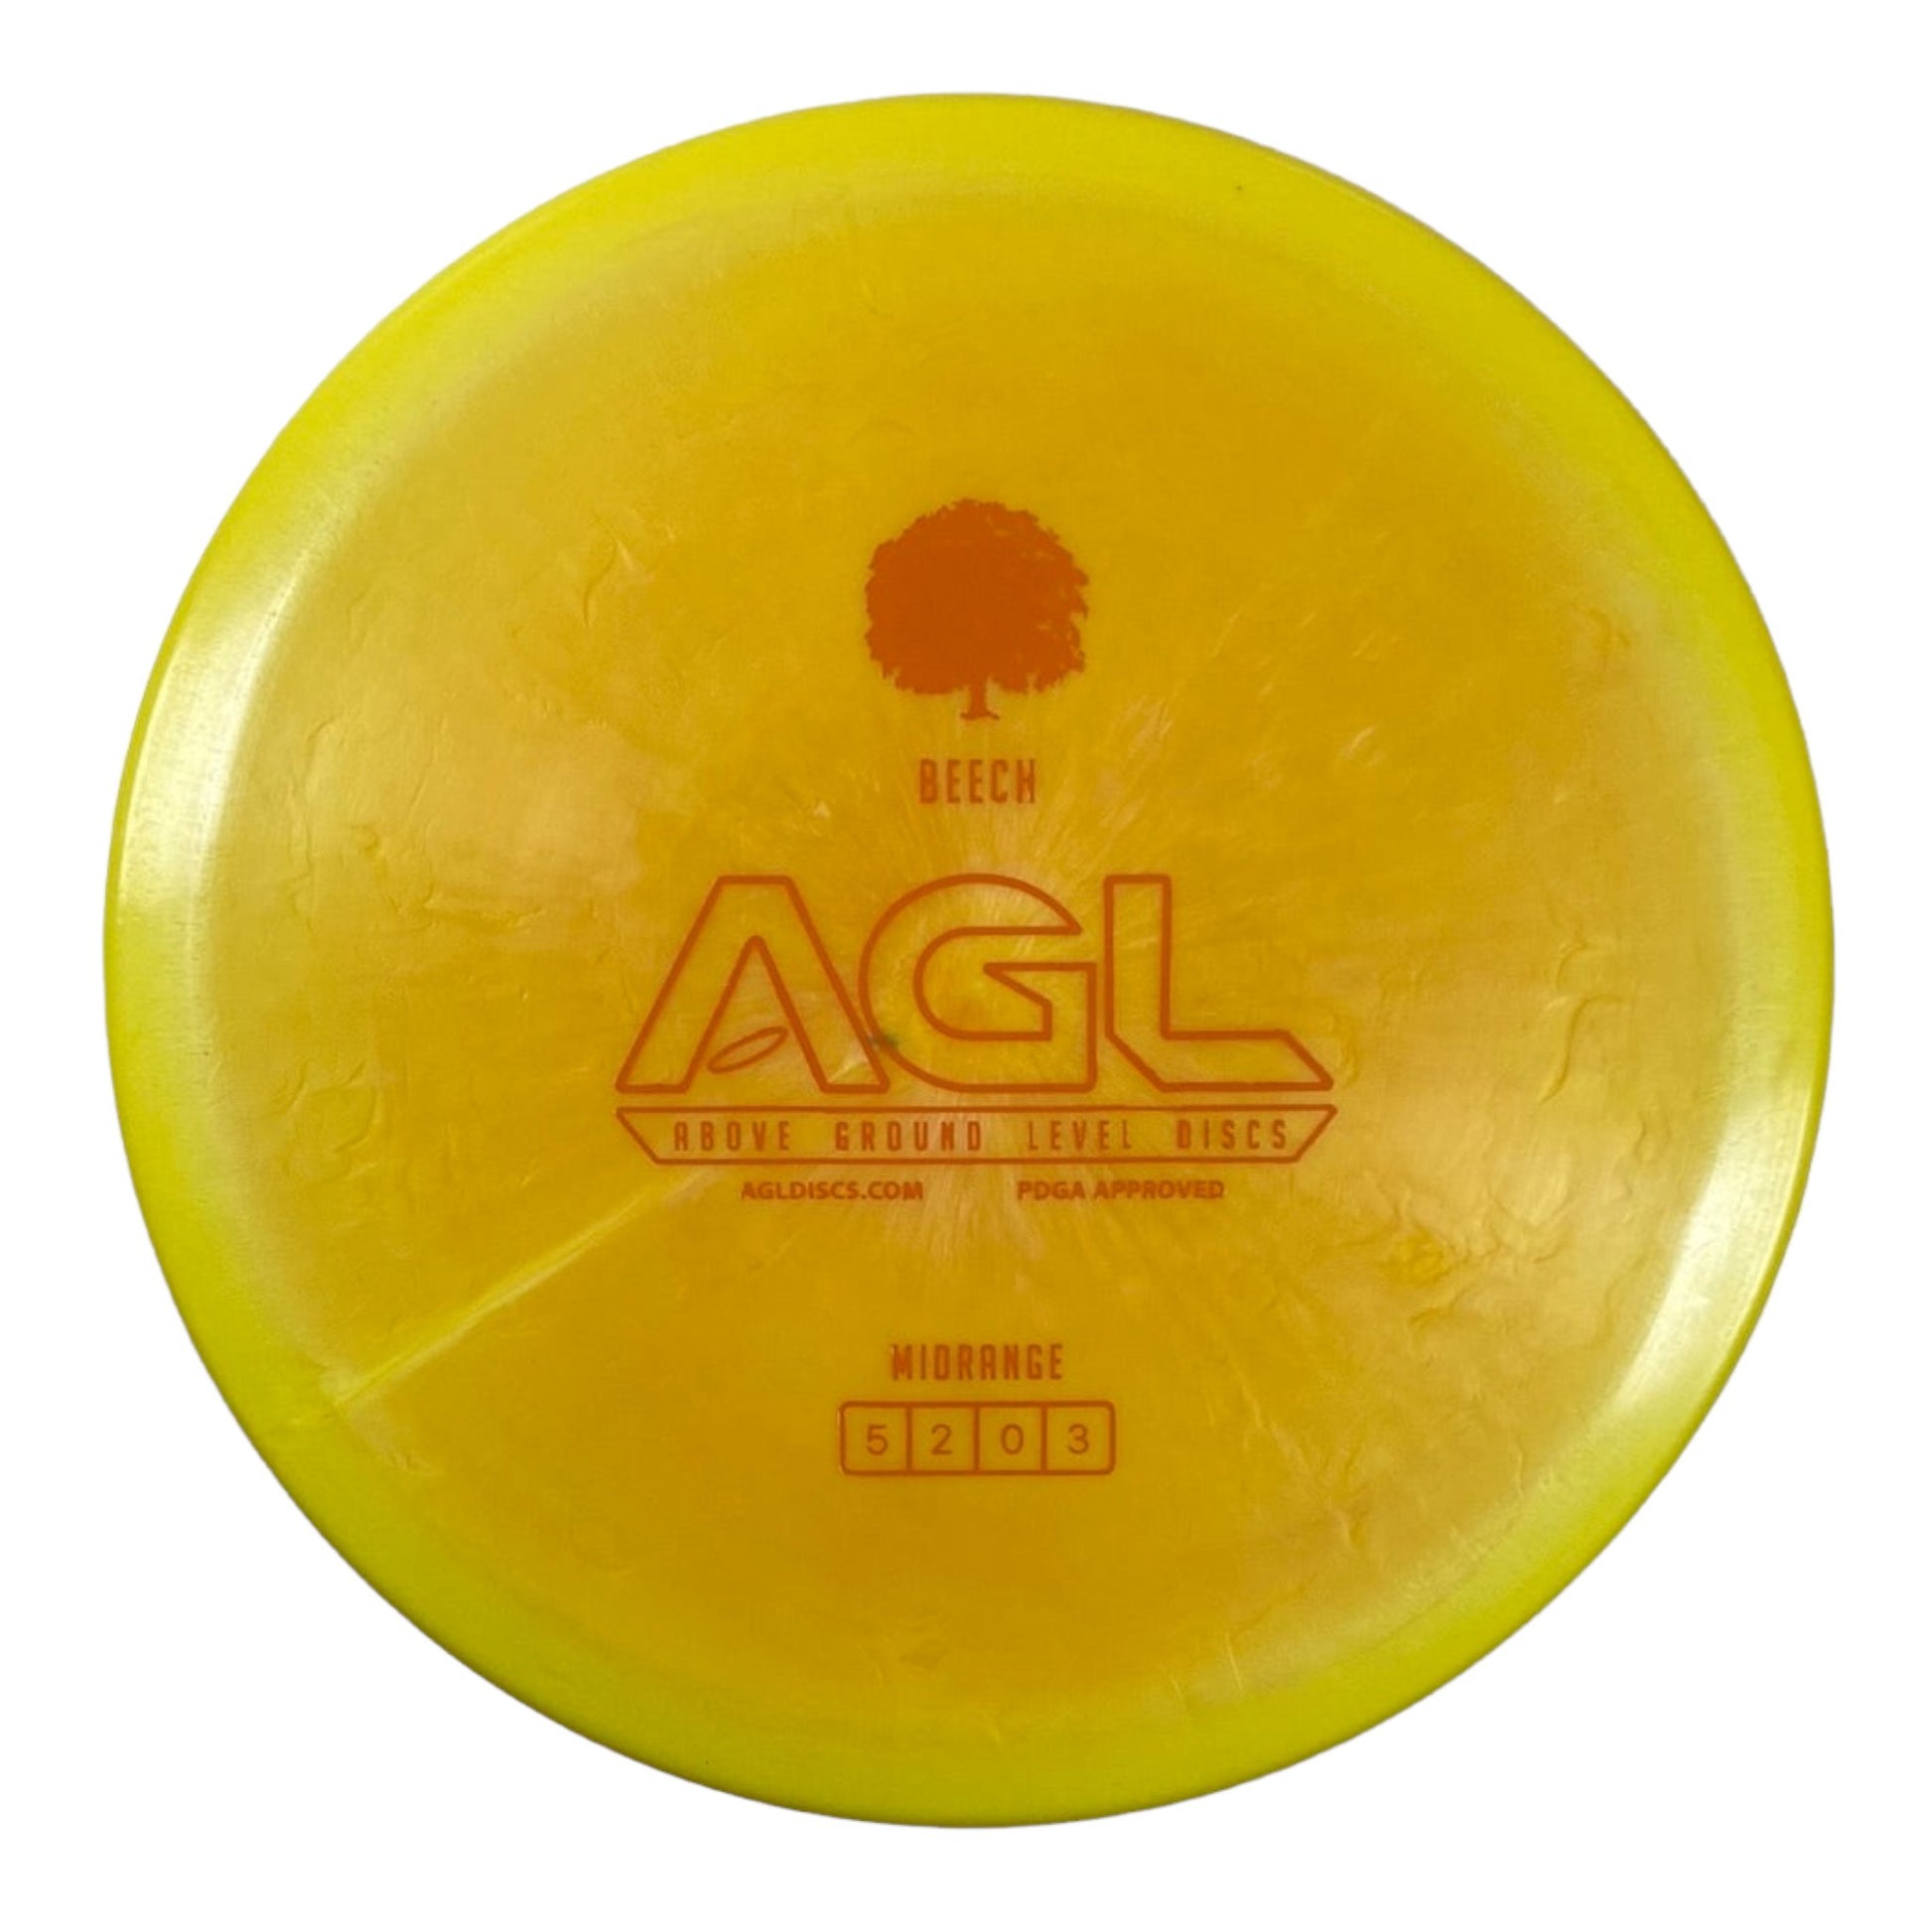 Above Ground Level Beech | Alpine | Yellow/Orange 176g Disc Golf